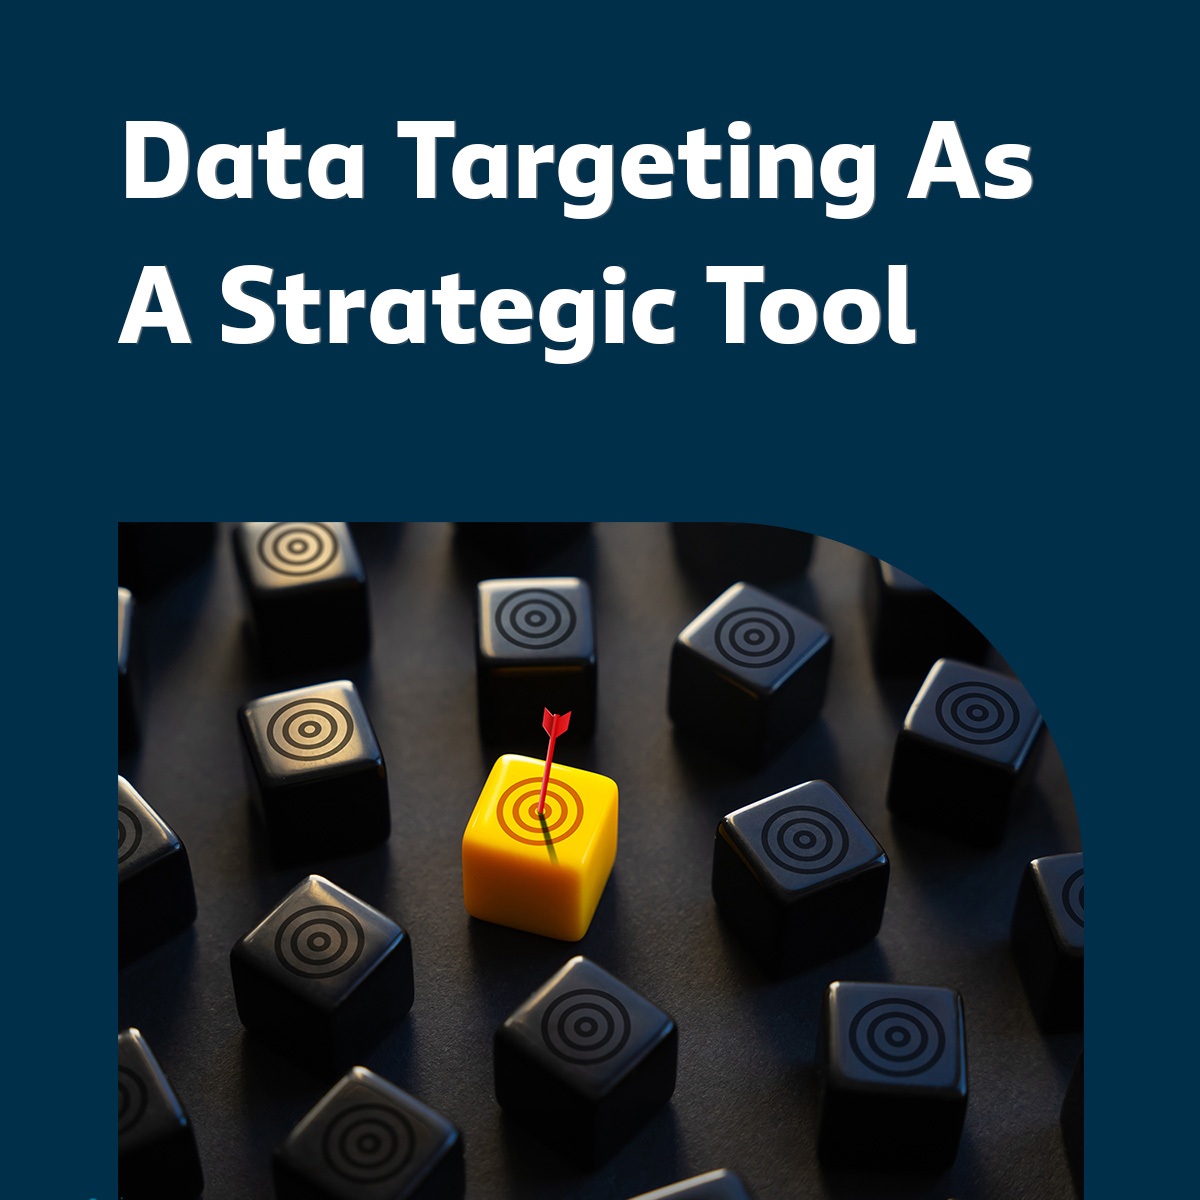 Data Targeting As A Strategic Tool